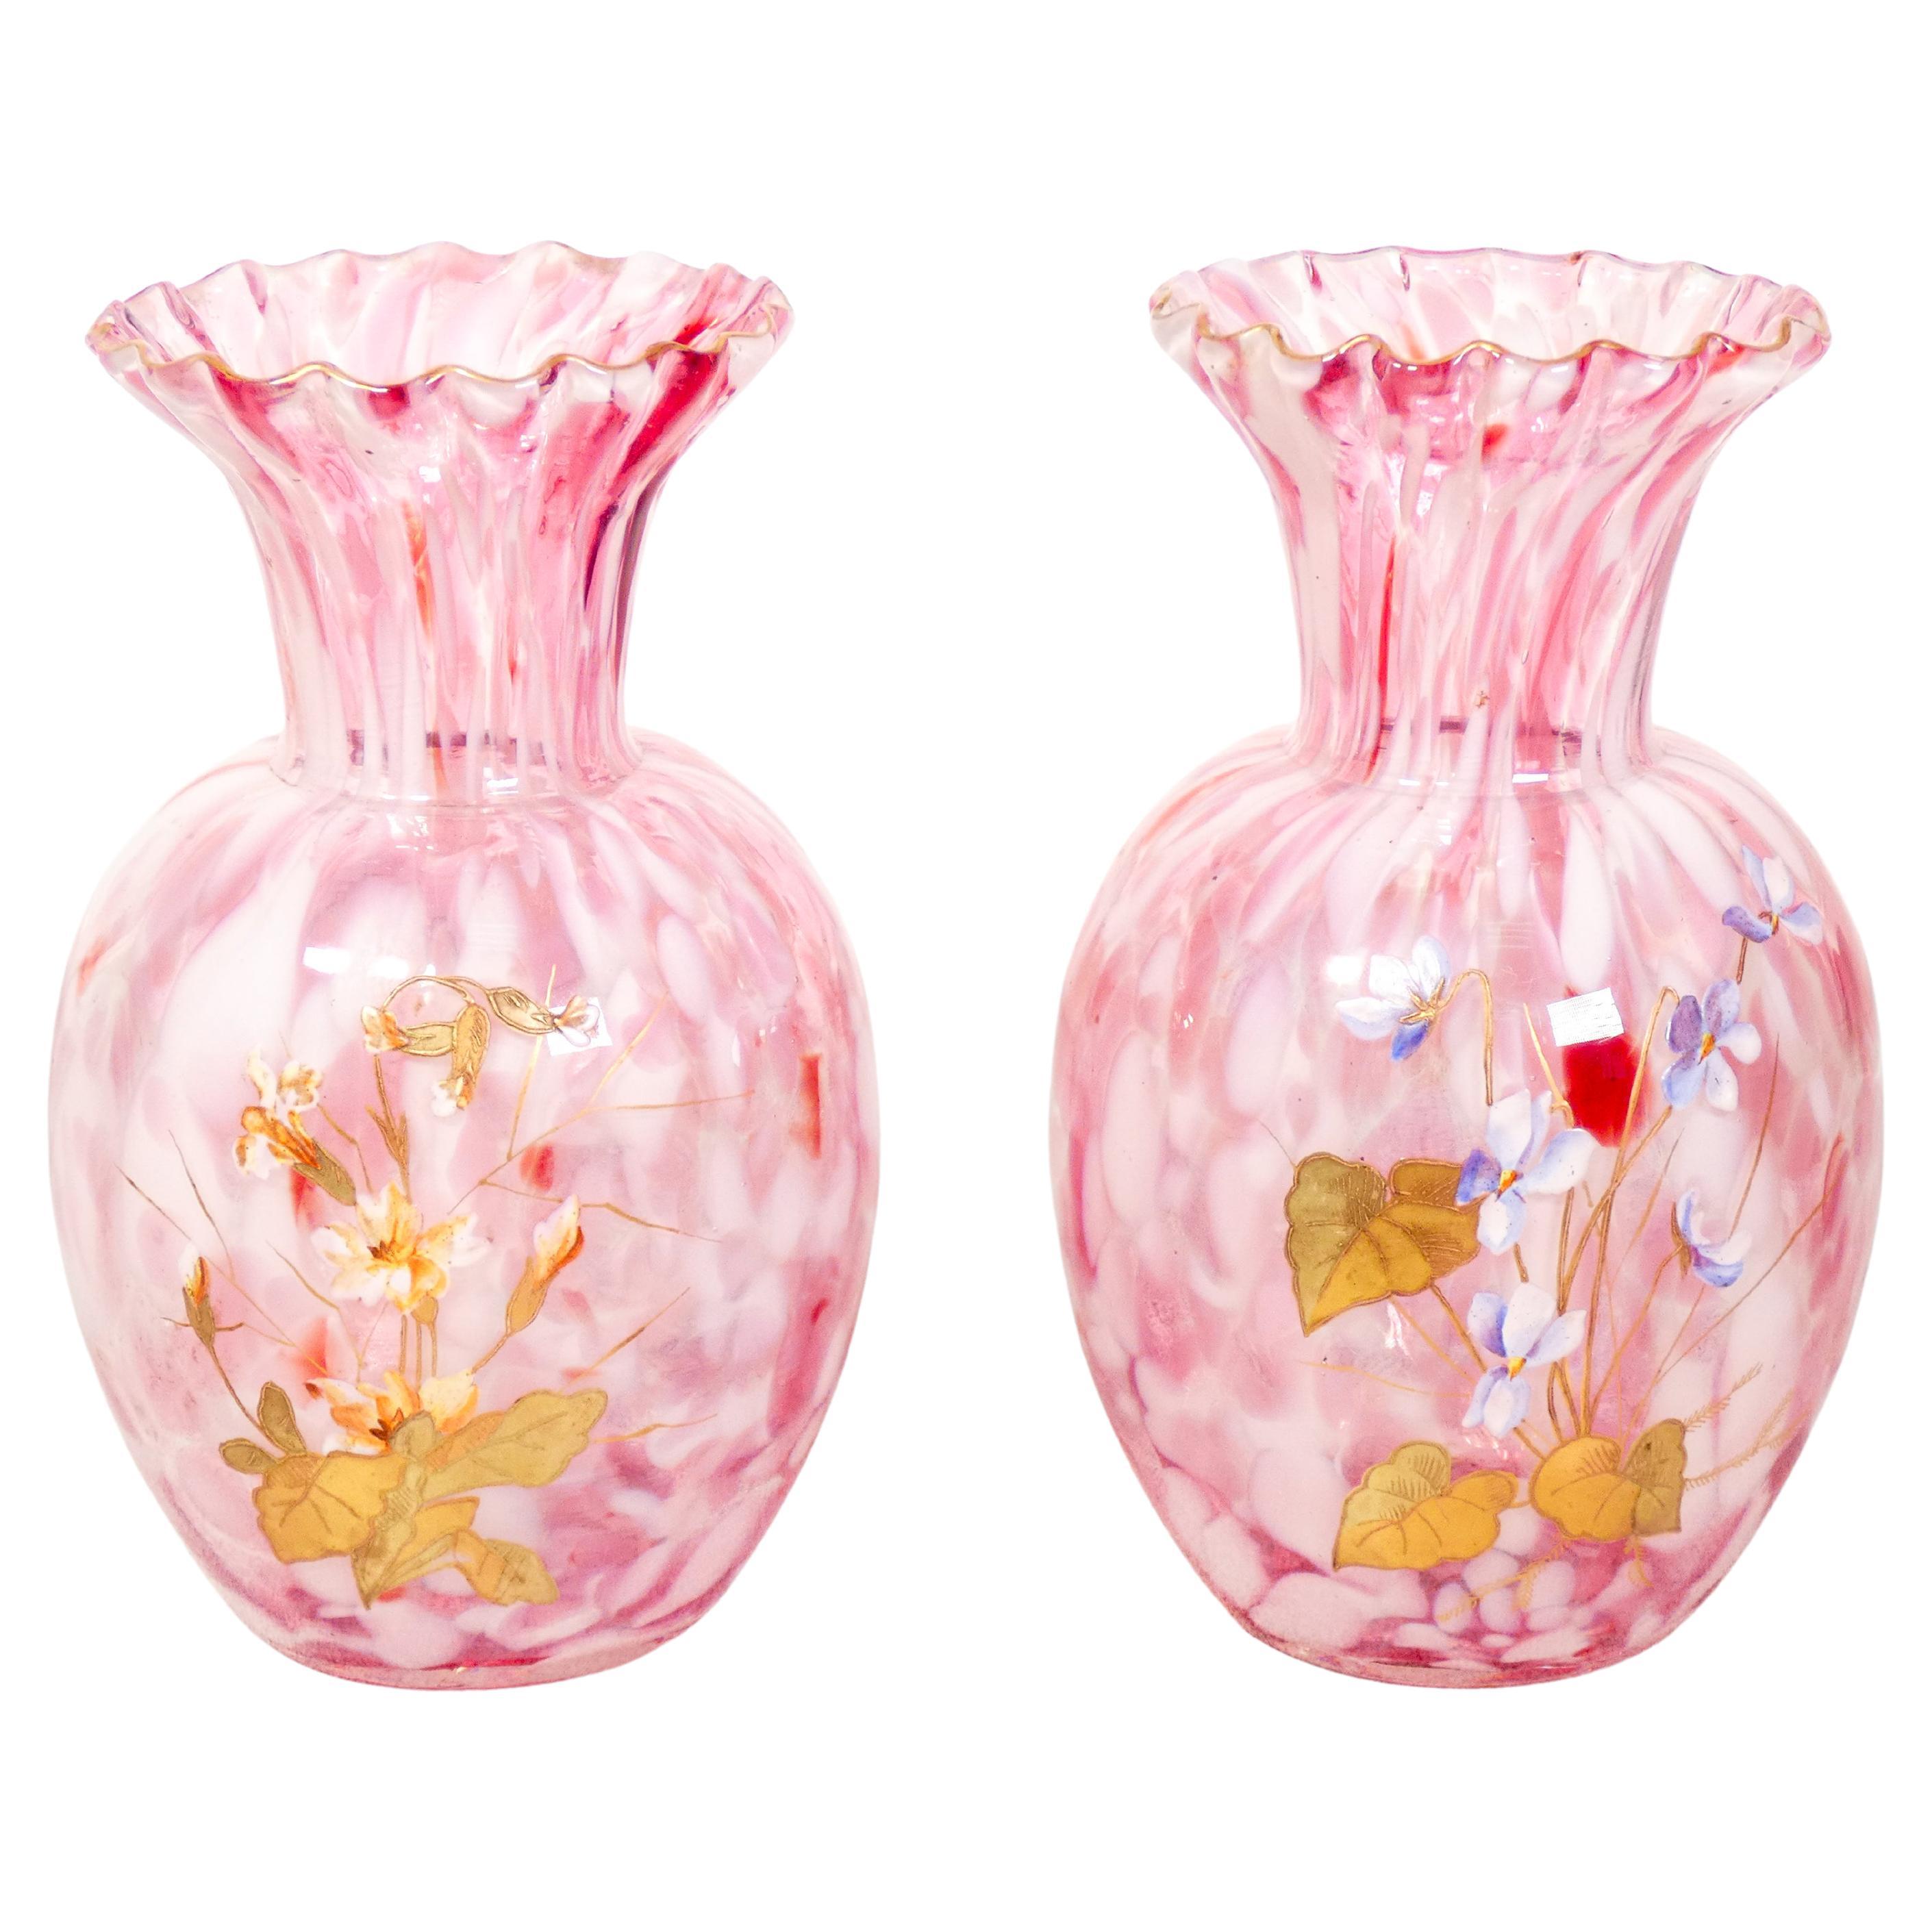 Pair of Blown Glass Vases, "Verrerie Saint Denis" 'post Legras', 1800 For Sale